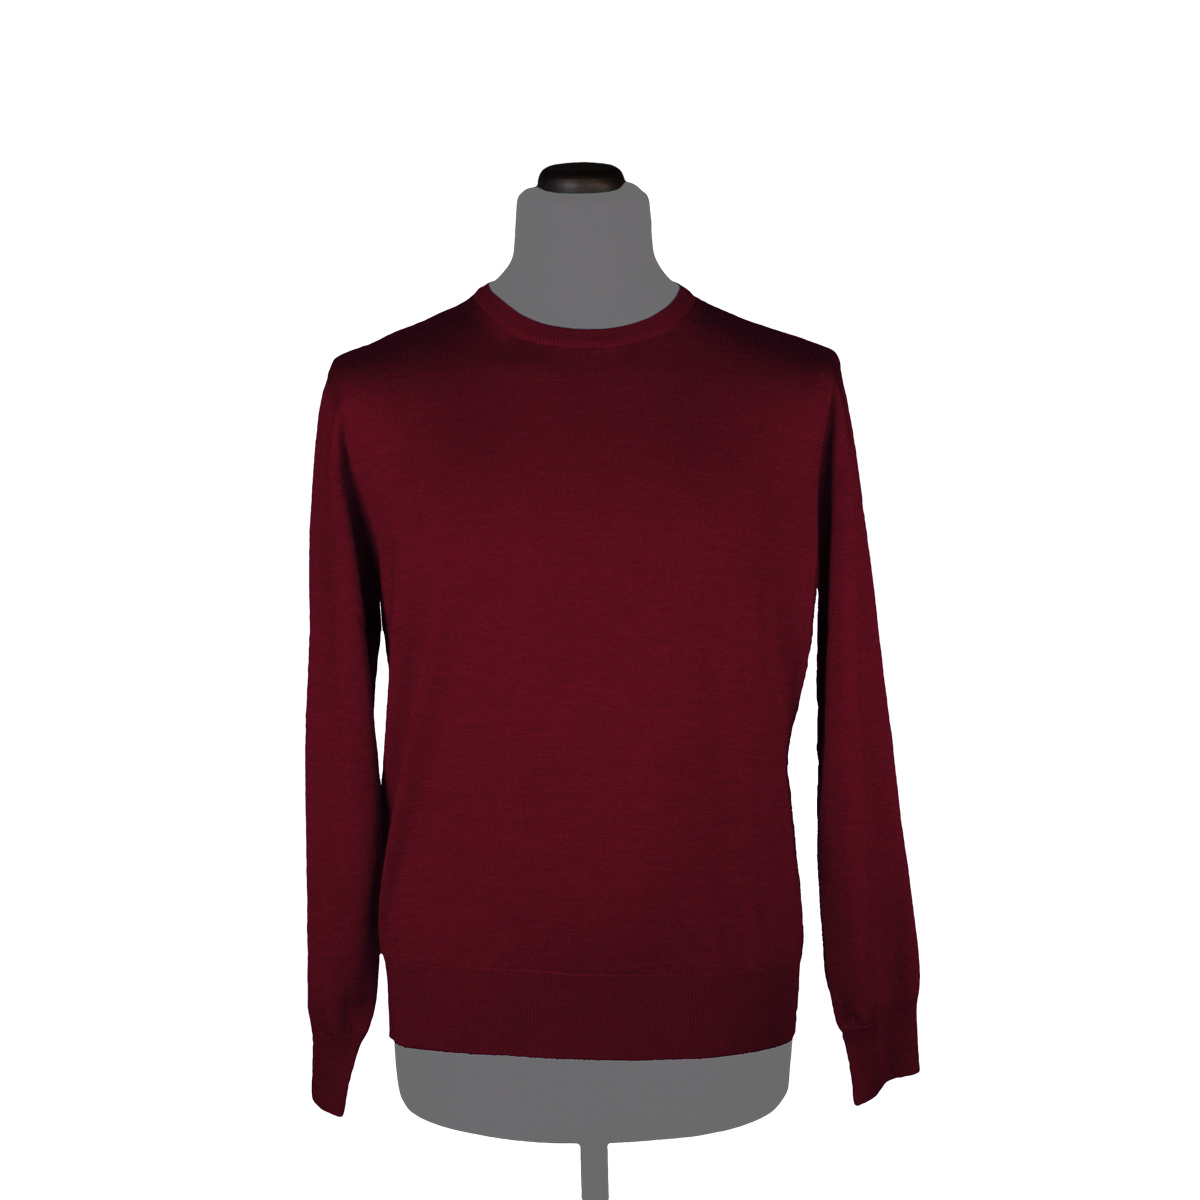 Silk cashmere crewneck sweater for men, burgundy - Di Franco Moda Italiana